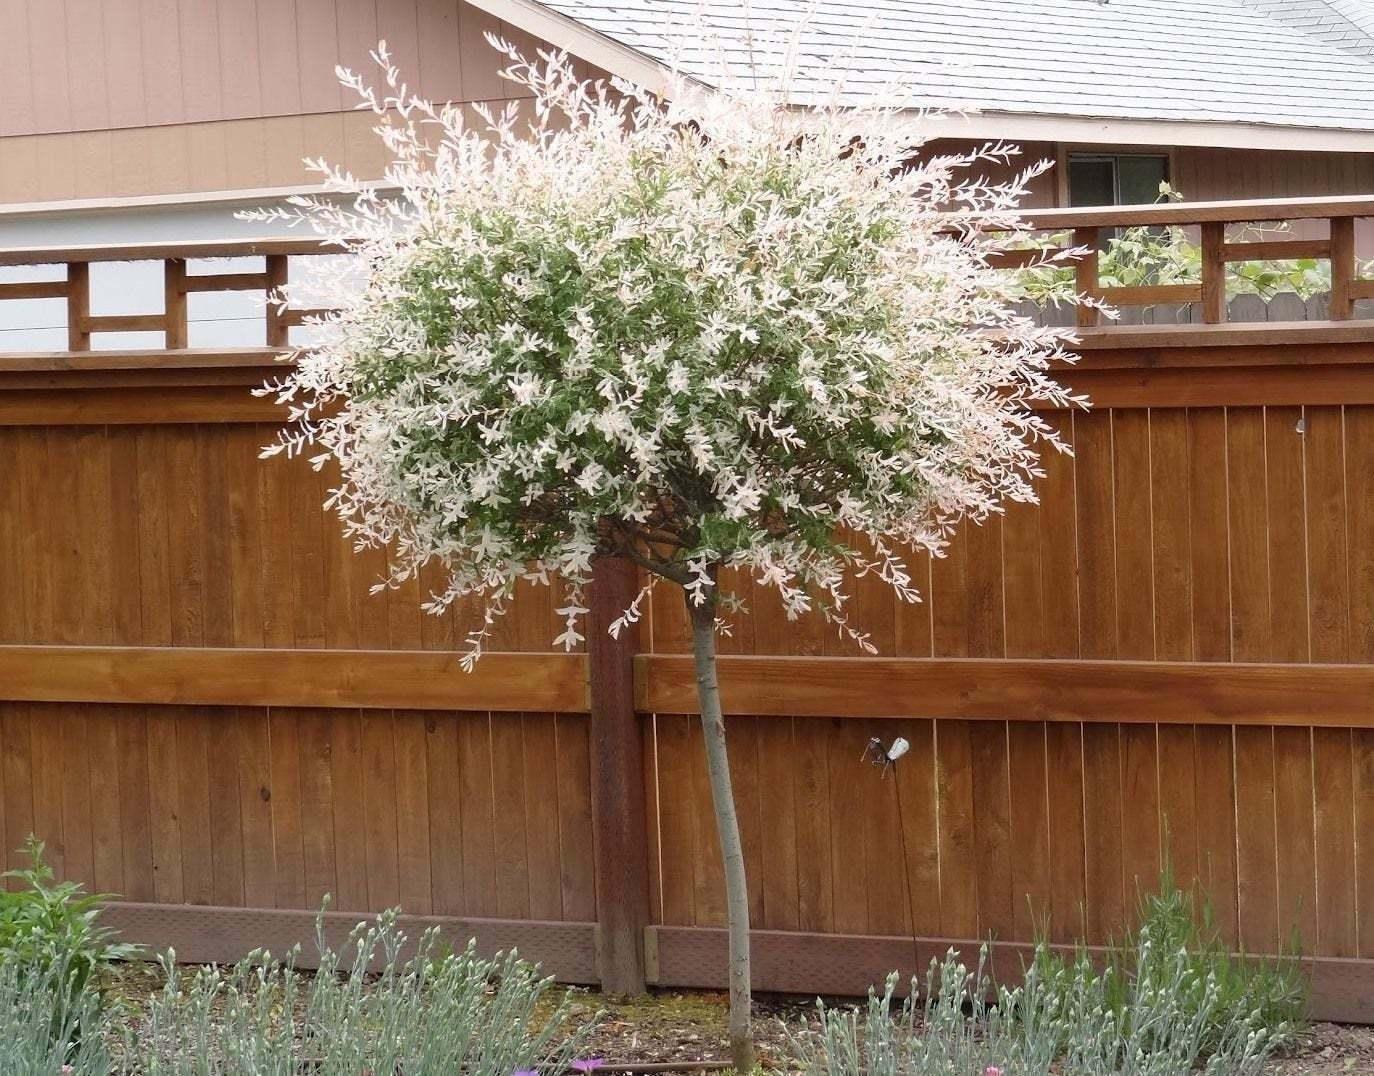 2 Japanese Nishiki Dappled Willow Shrubs/Trees - 8-12" Tall Live Plants - 4" Pot - The Nursery Center